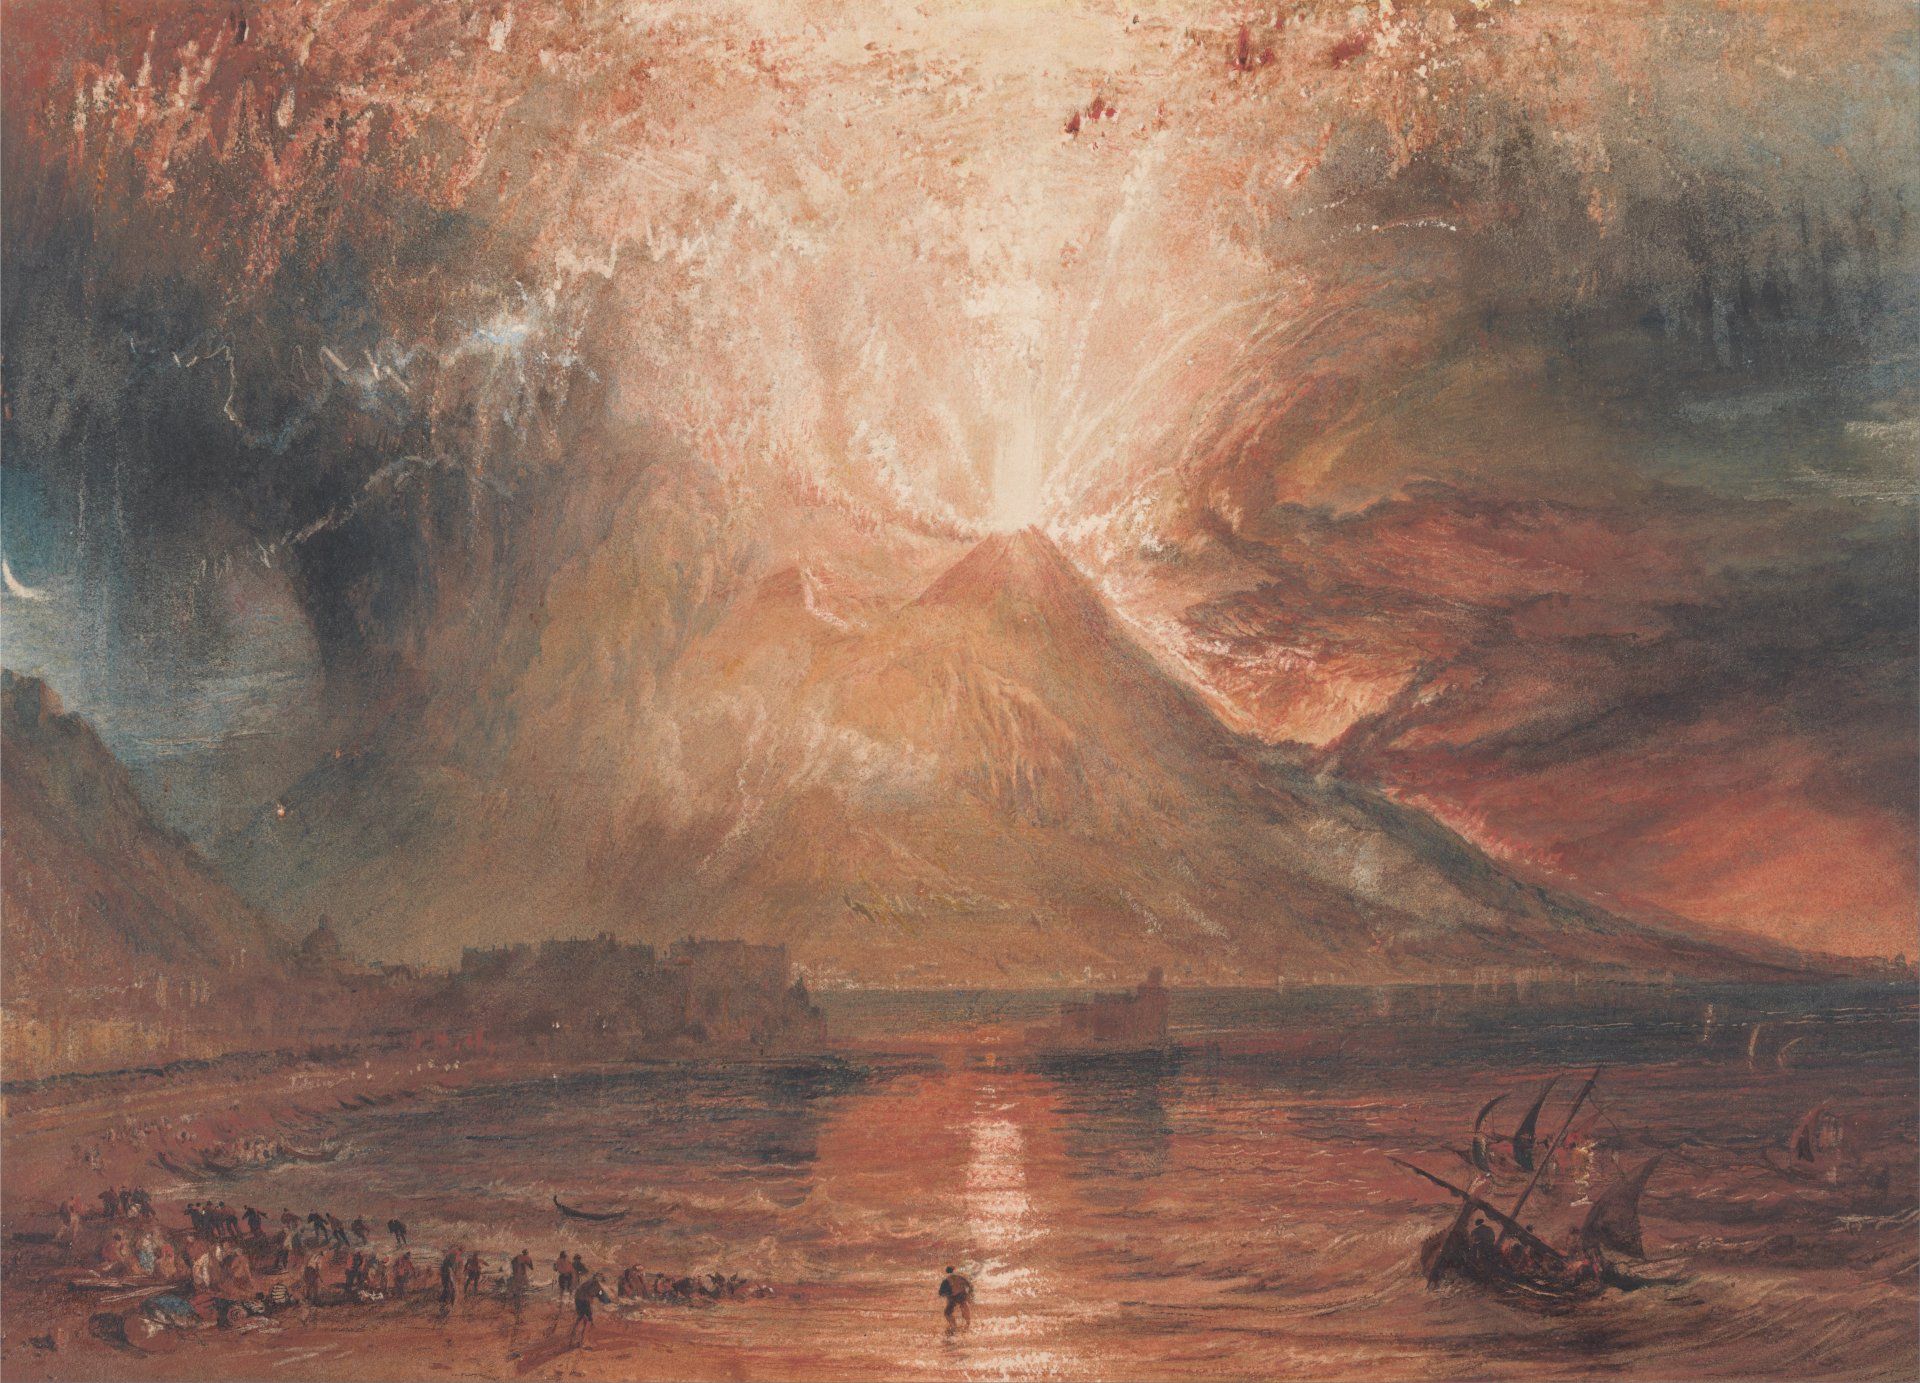 Wallpaper by J. M. W. Turner